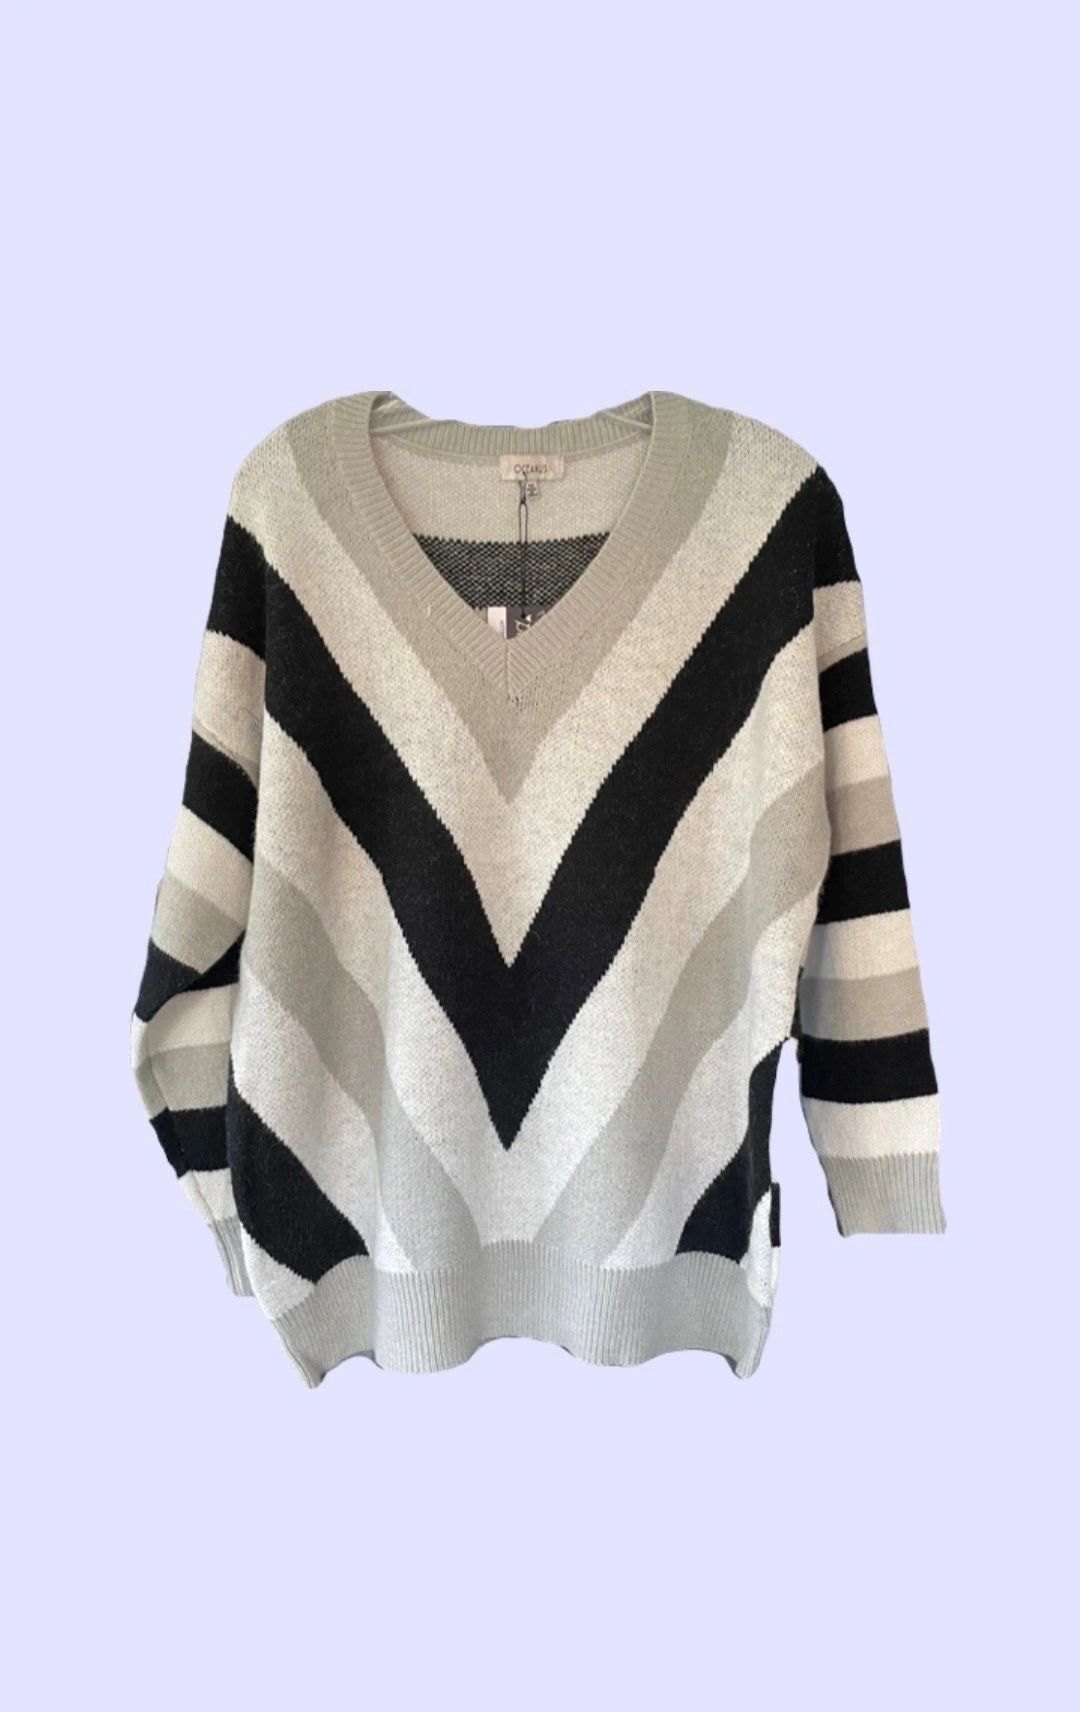 Chevron Sweater - Black, White and Grey